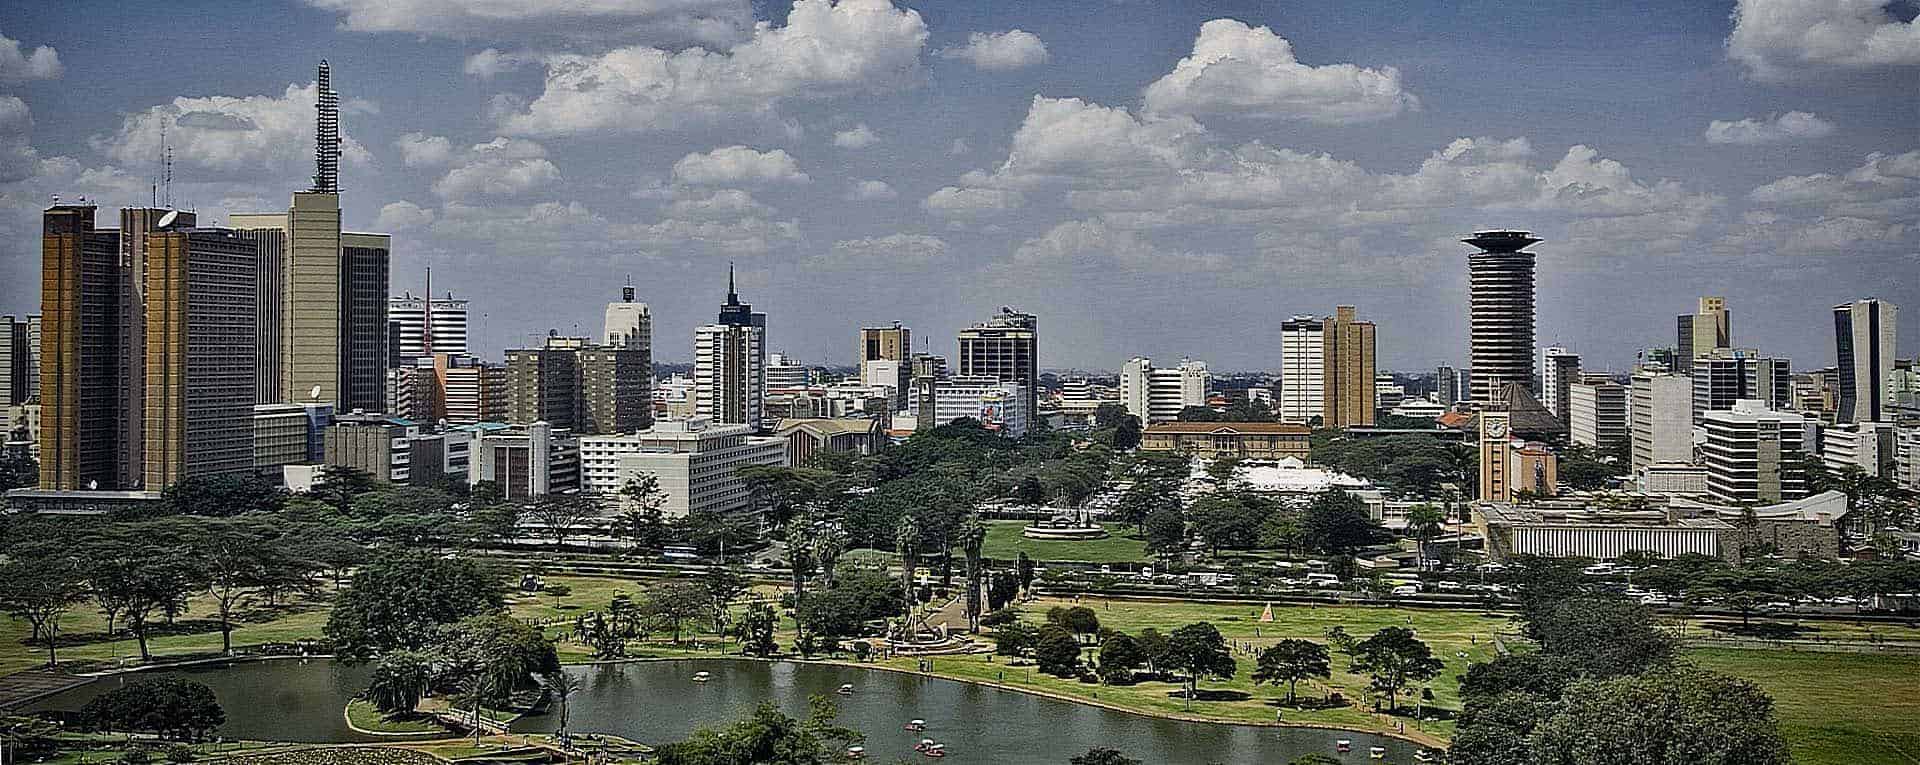 An aerial view of Nairobi City